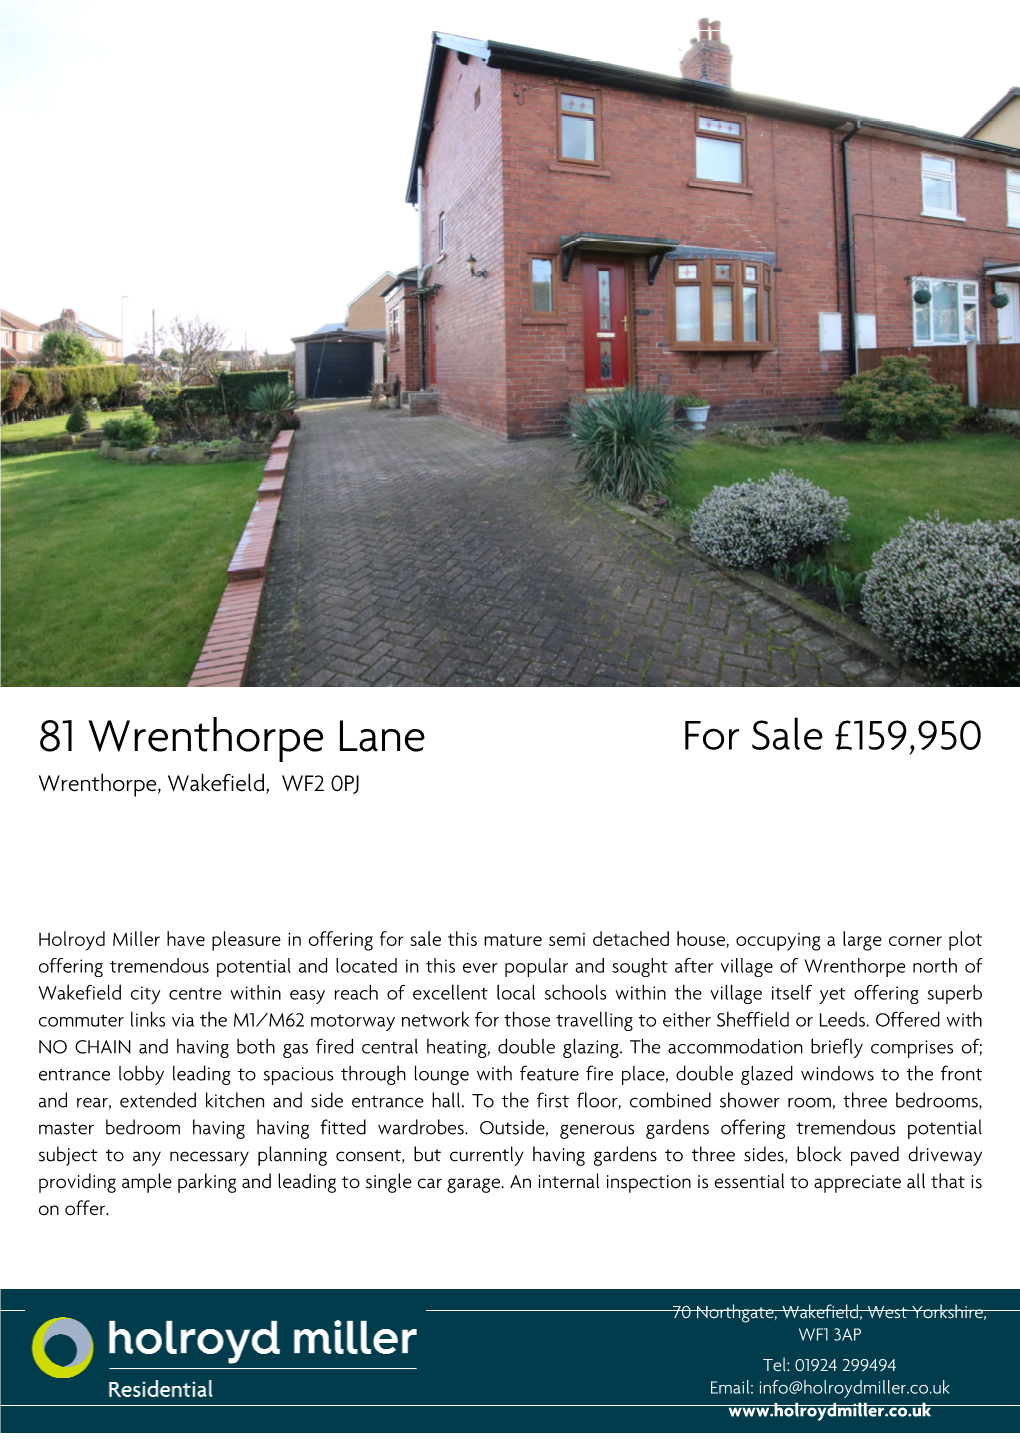 81 Wrenthorpe Lane for Sale £159,950 Wrenthorpe, Wakefield, WF2 0PJ